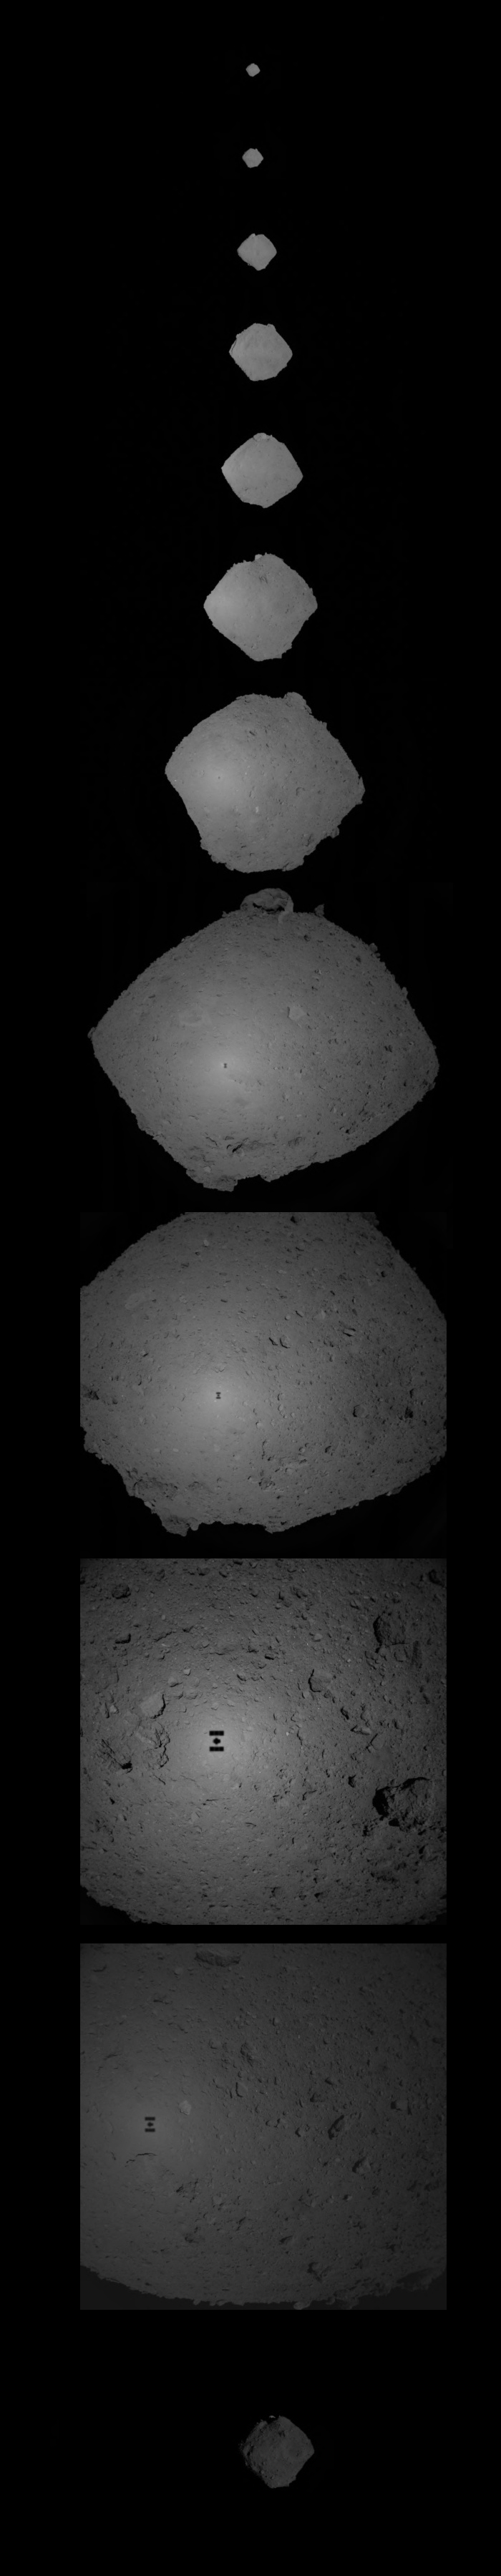 Репетиция TD1-R3 посадки на астероид Рюгу